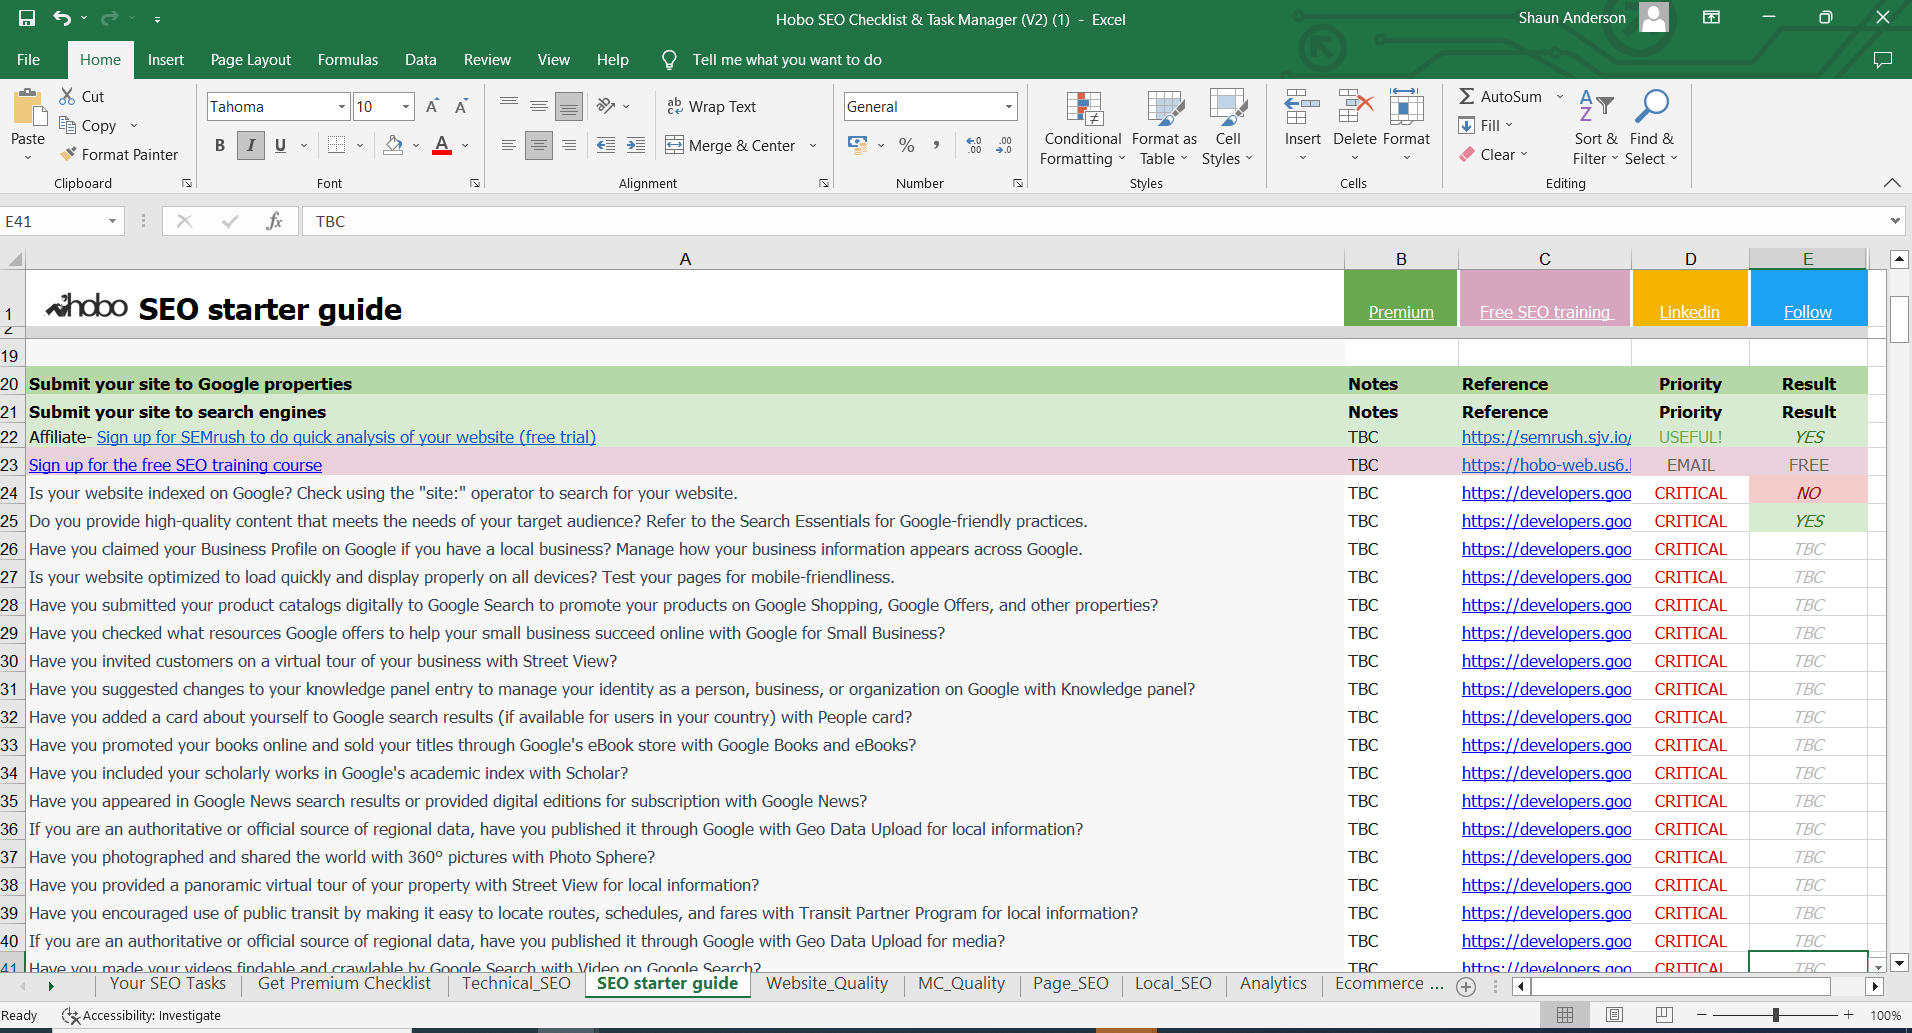 SEO checklist in Microsoft excel spreadsheet